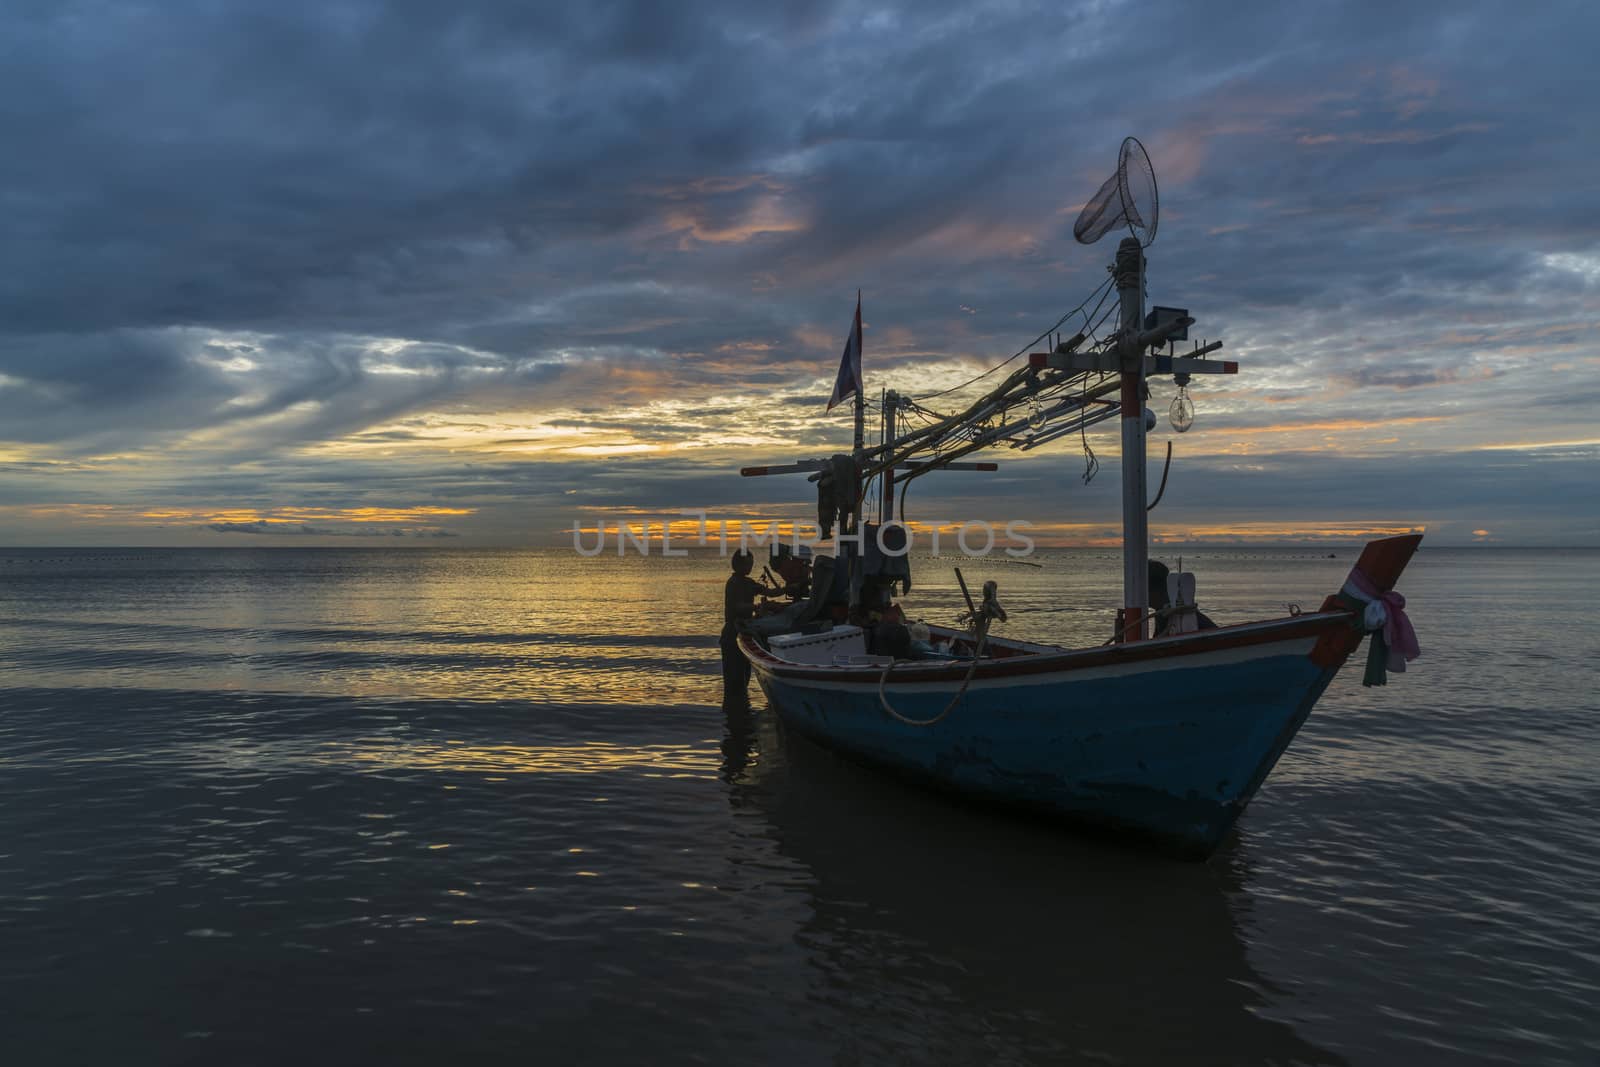 Tropical fishing boat in dawn by hongee